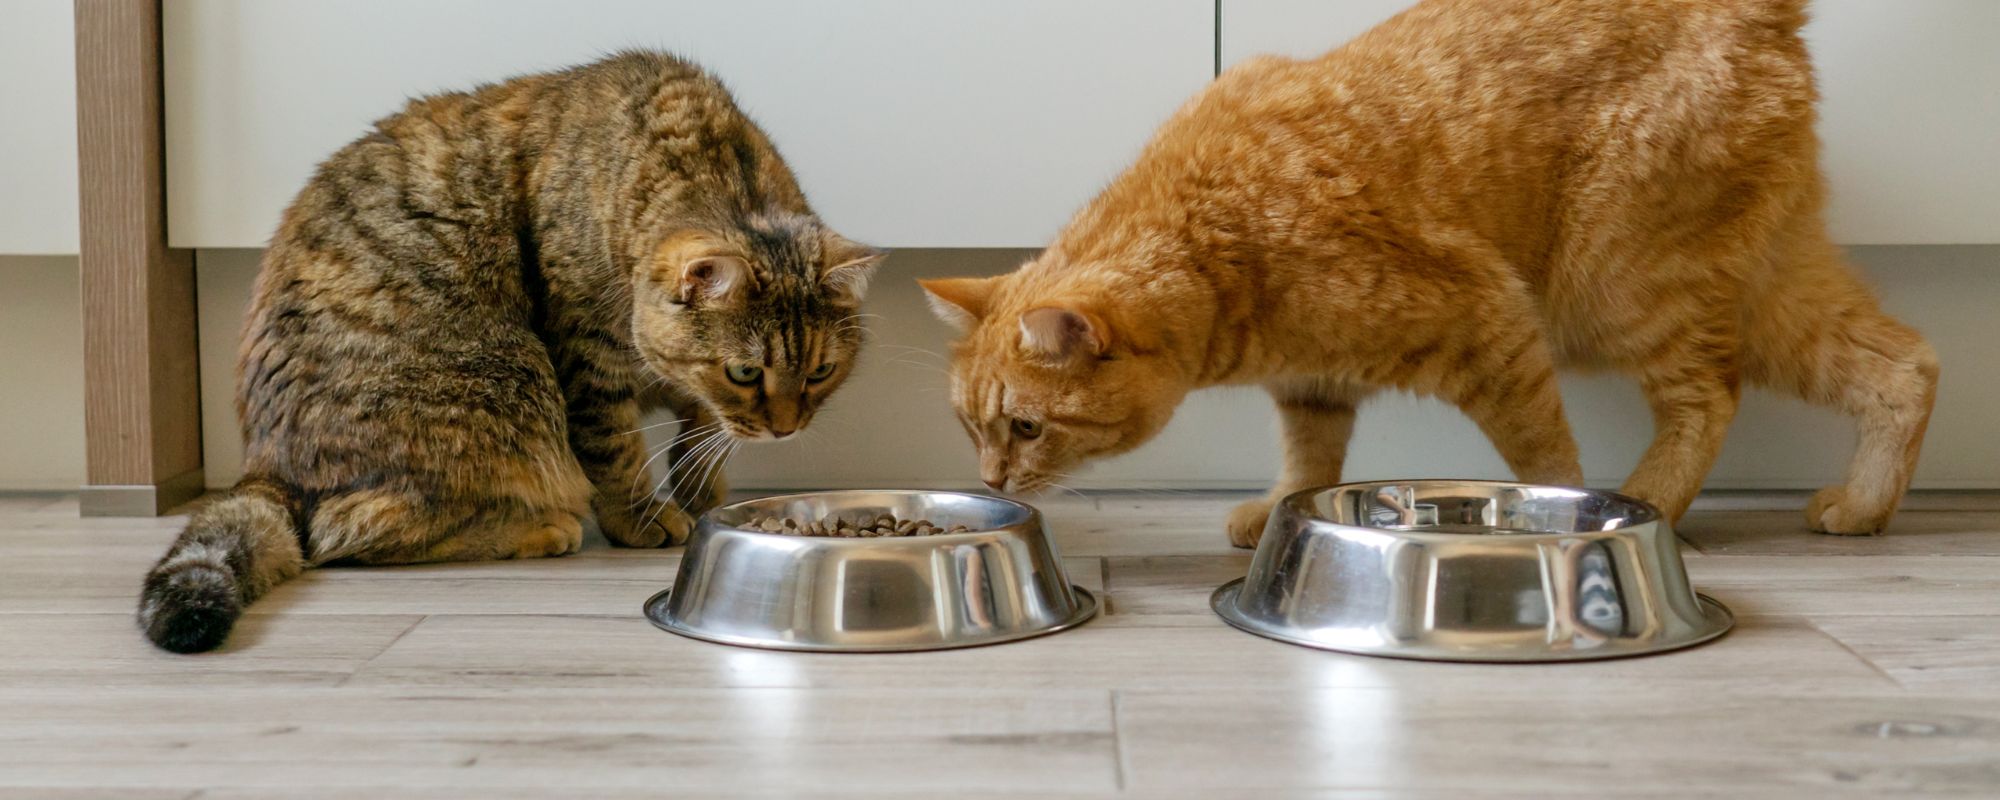 test aliments pour chat